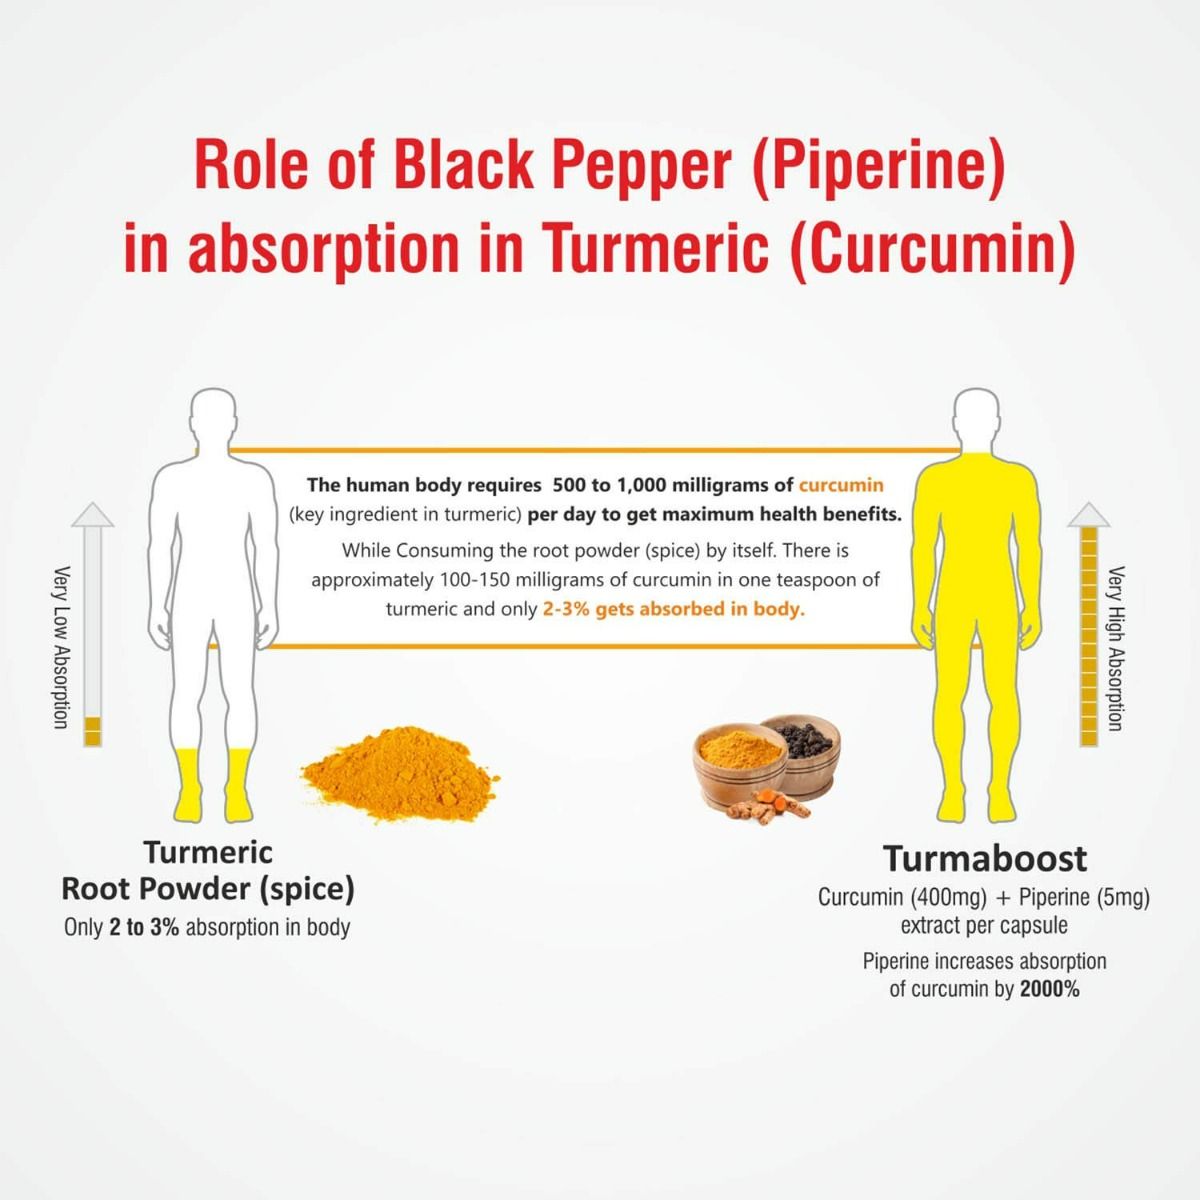 Turma Boost Curcumin + Black Pepper Extract, 10 Capsules, Pack of 10 S